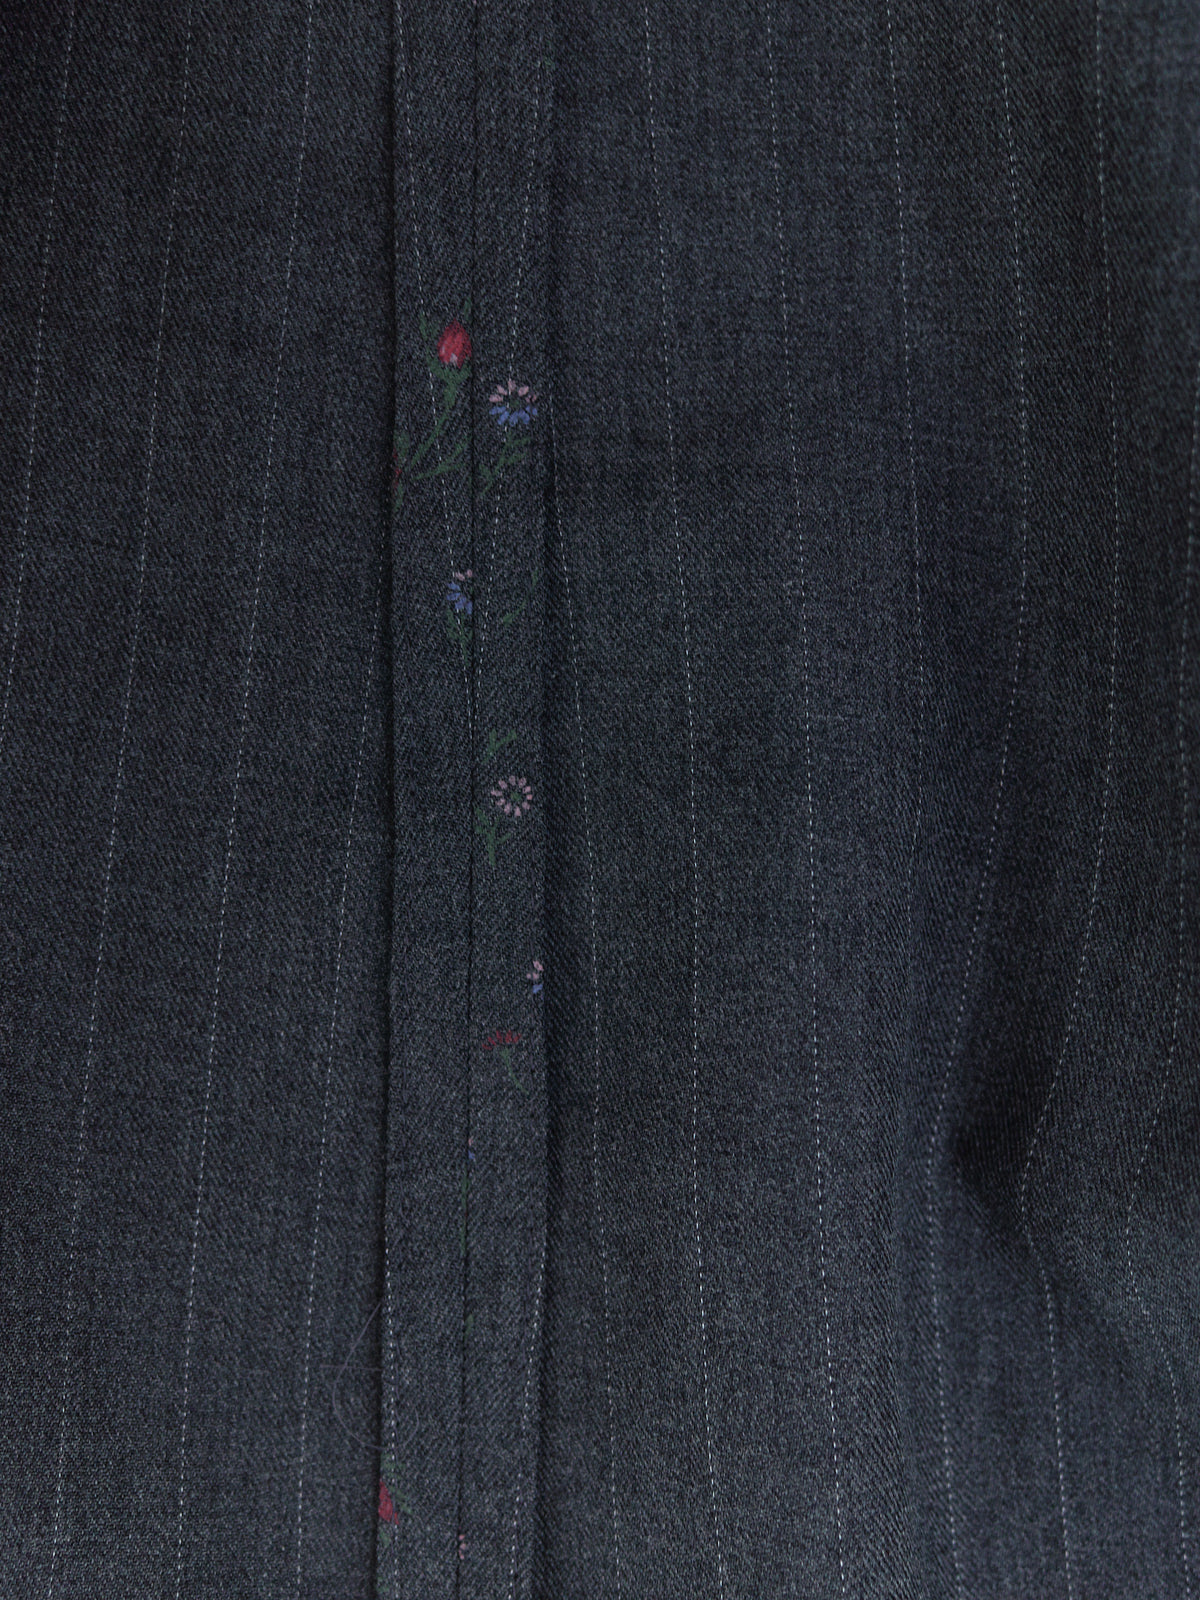 Robe de Chambre Comme des Garcons 1993 grey wool stripe floral print jacket M S